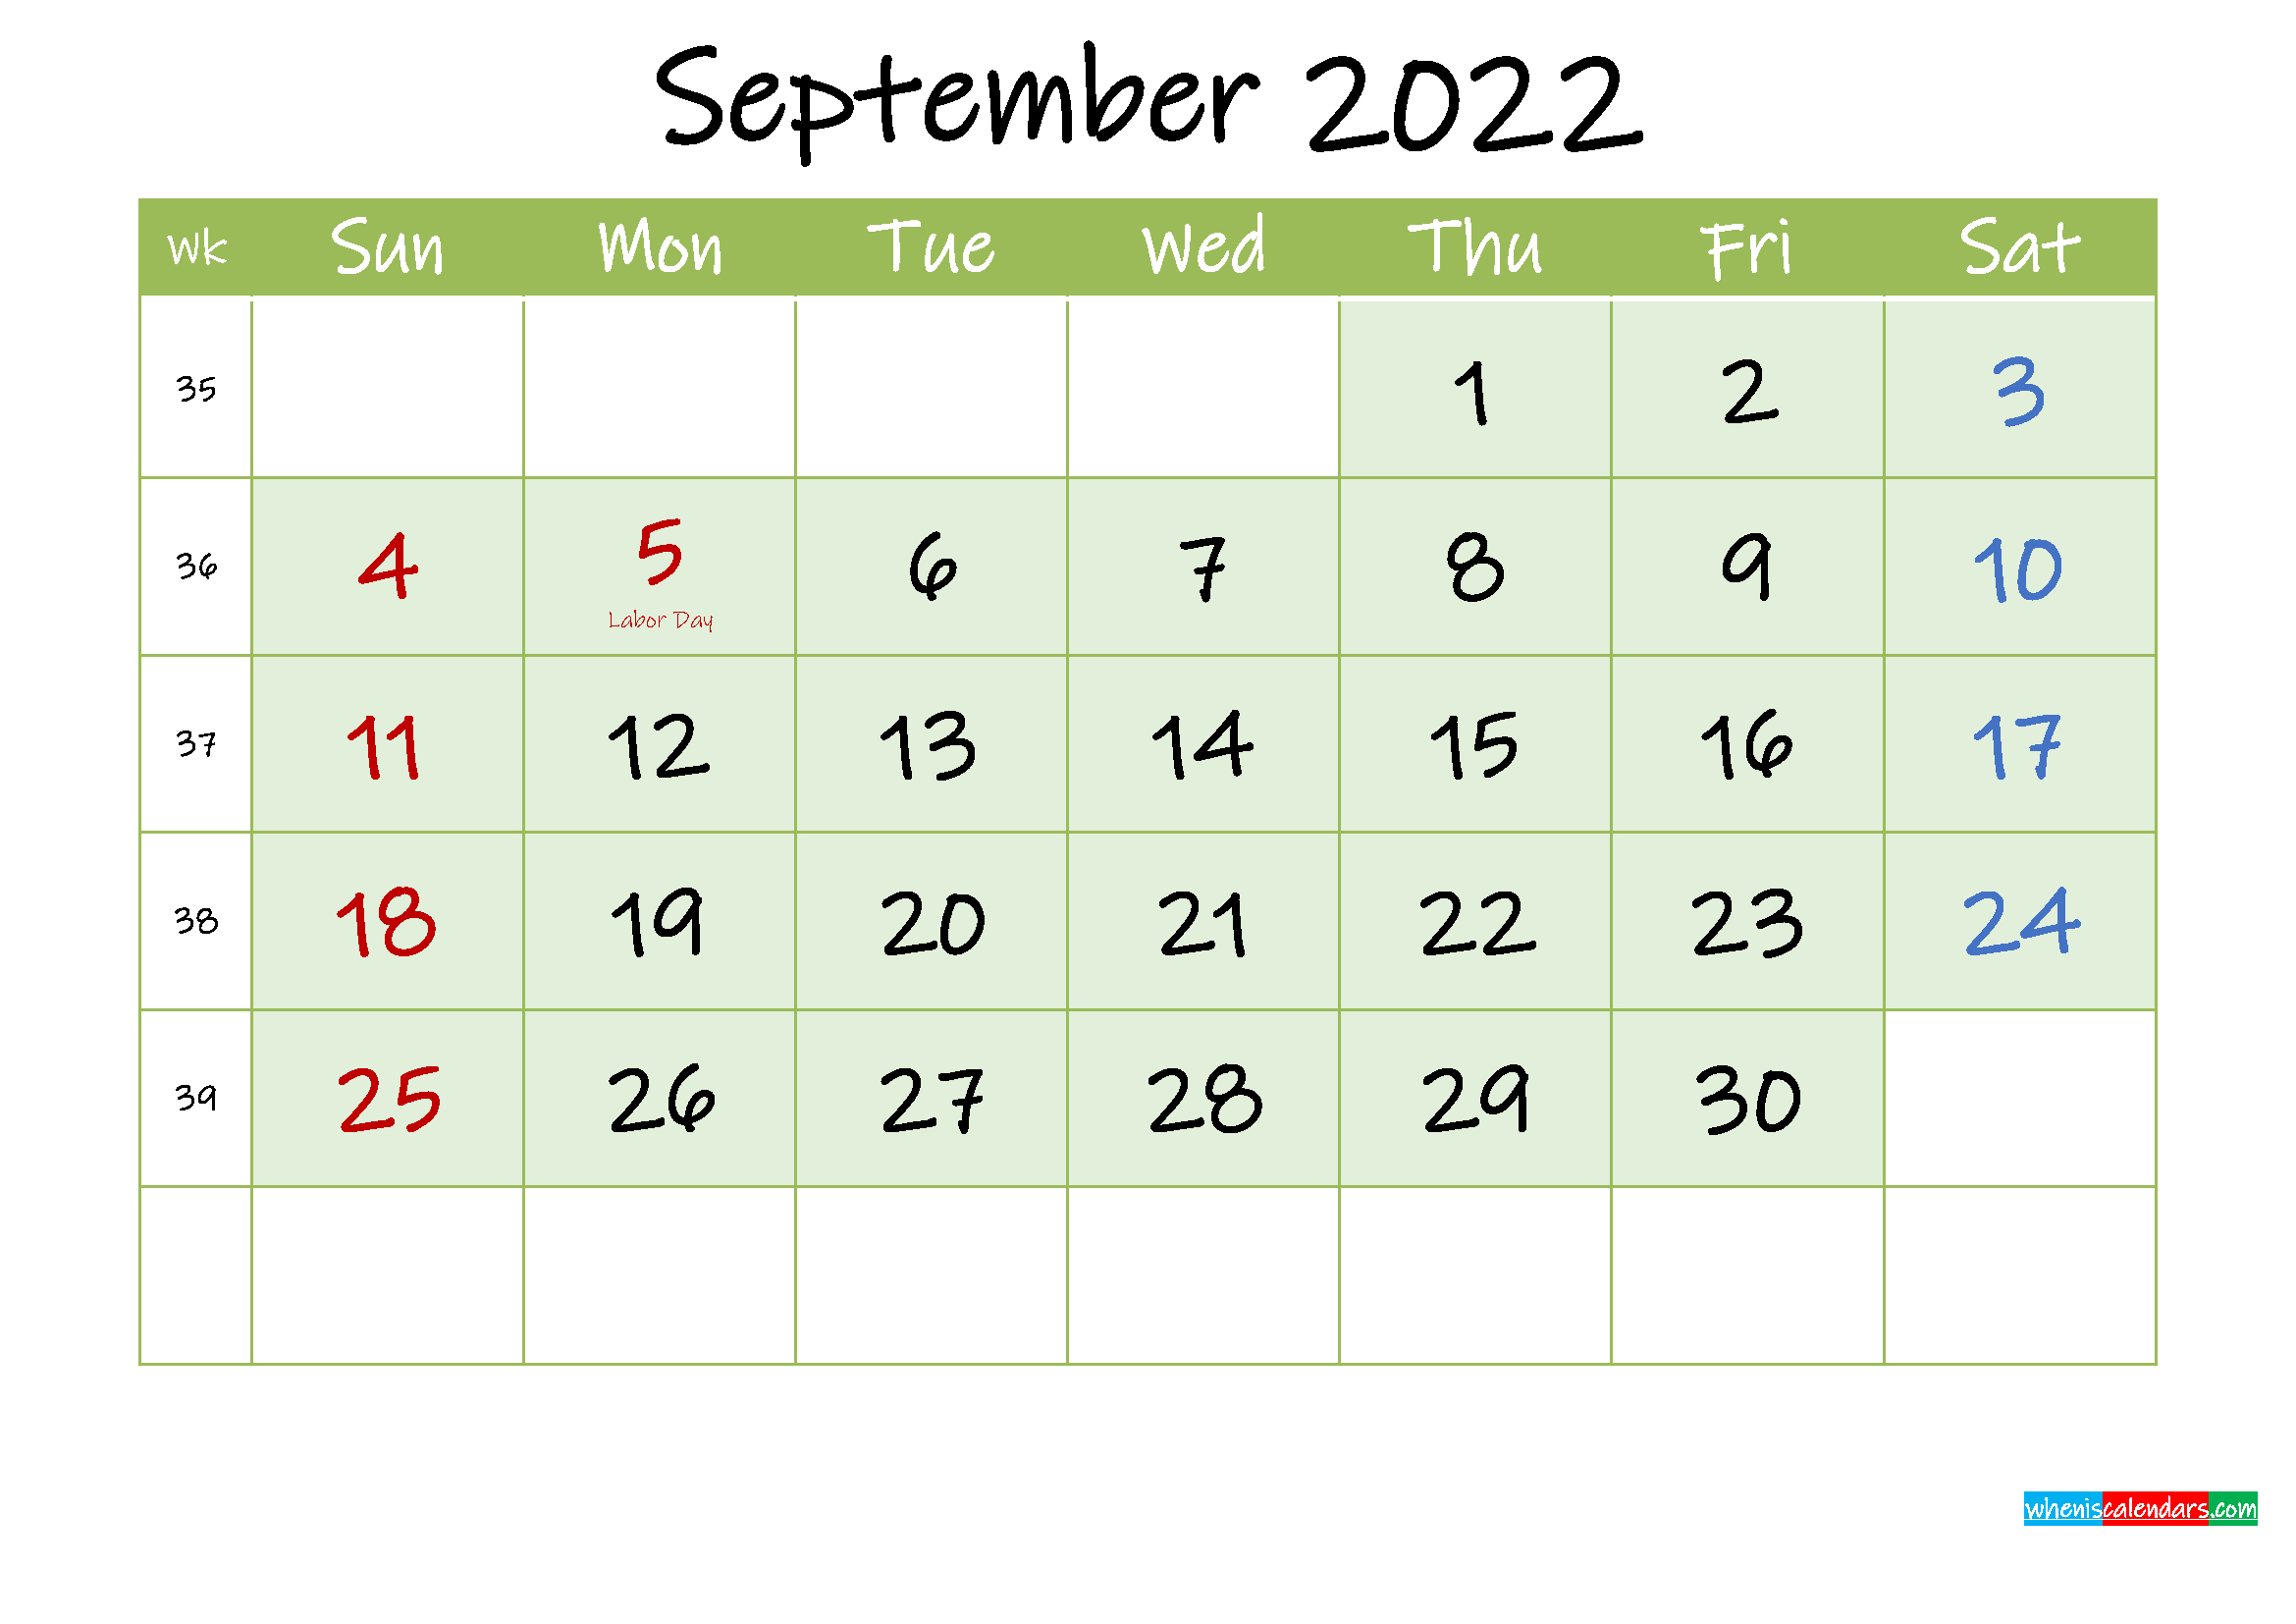 September 2022 Free Printable Calendar - Template Ink22M129